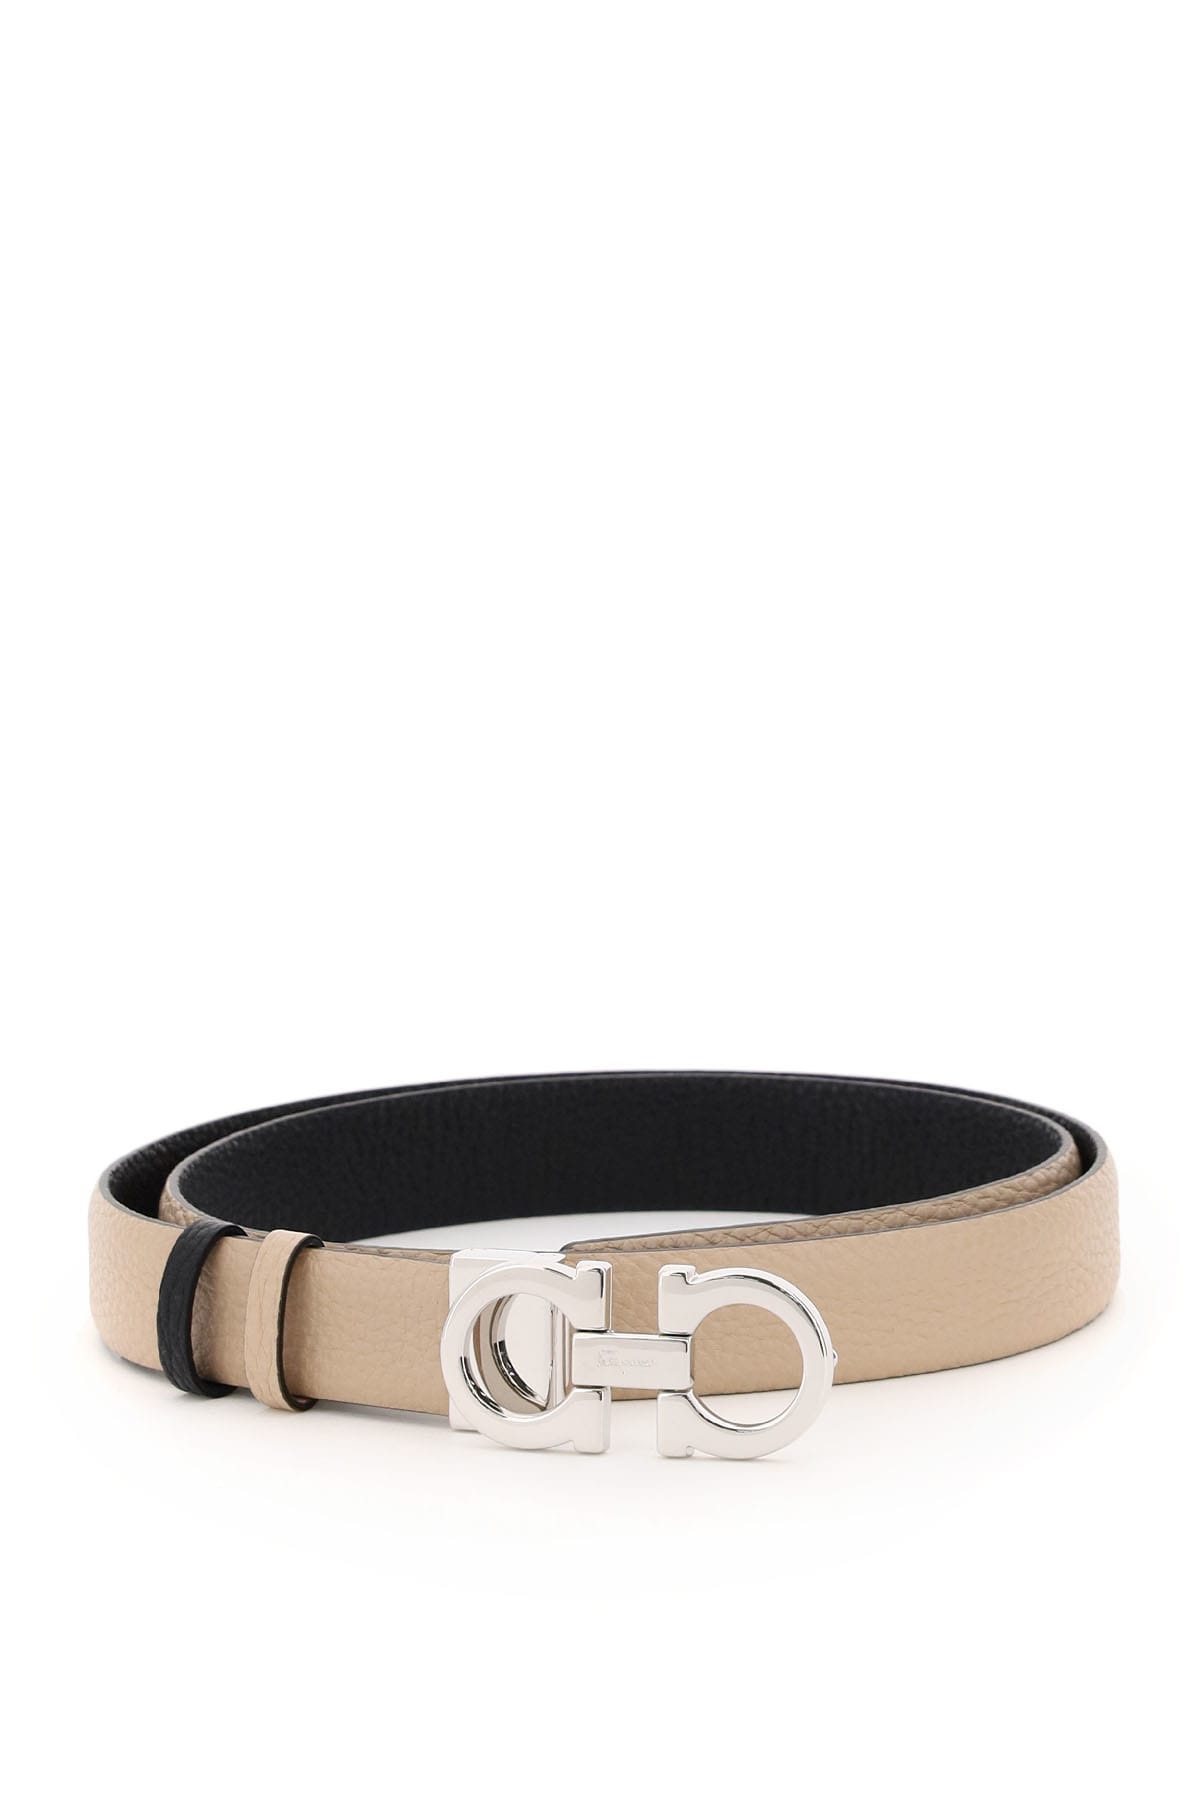 Ferragamo Gancini Reversible & Adjustable Leather Belt - Black - 75 cm